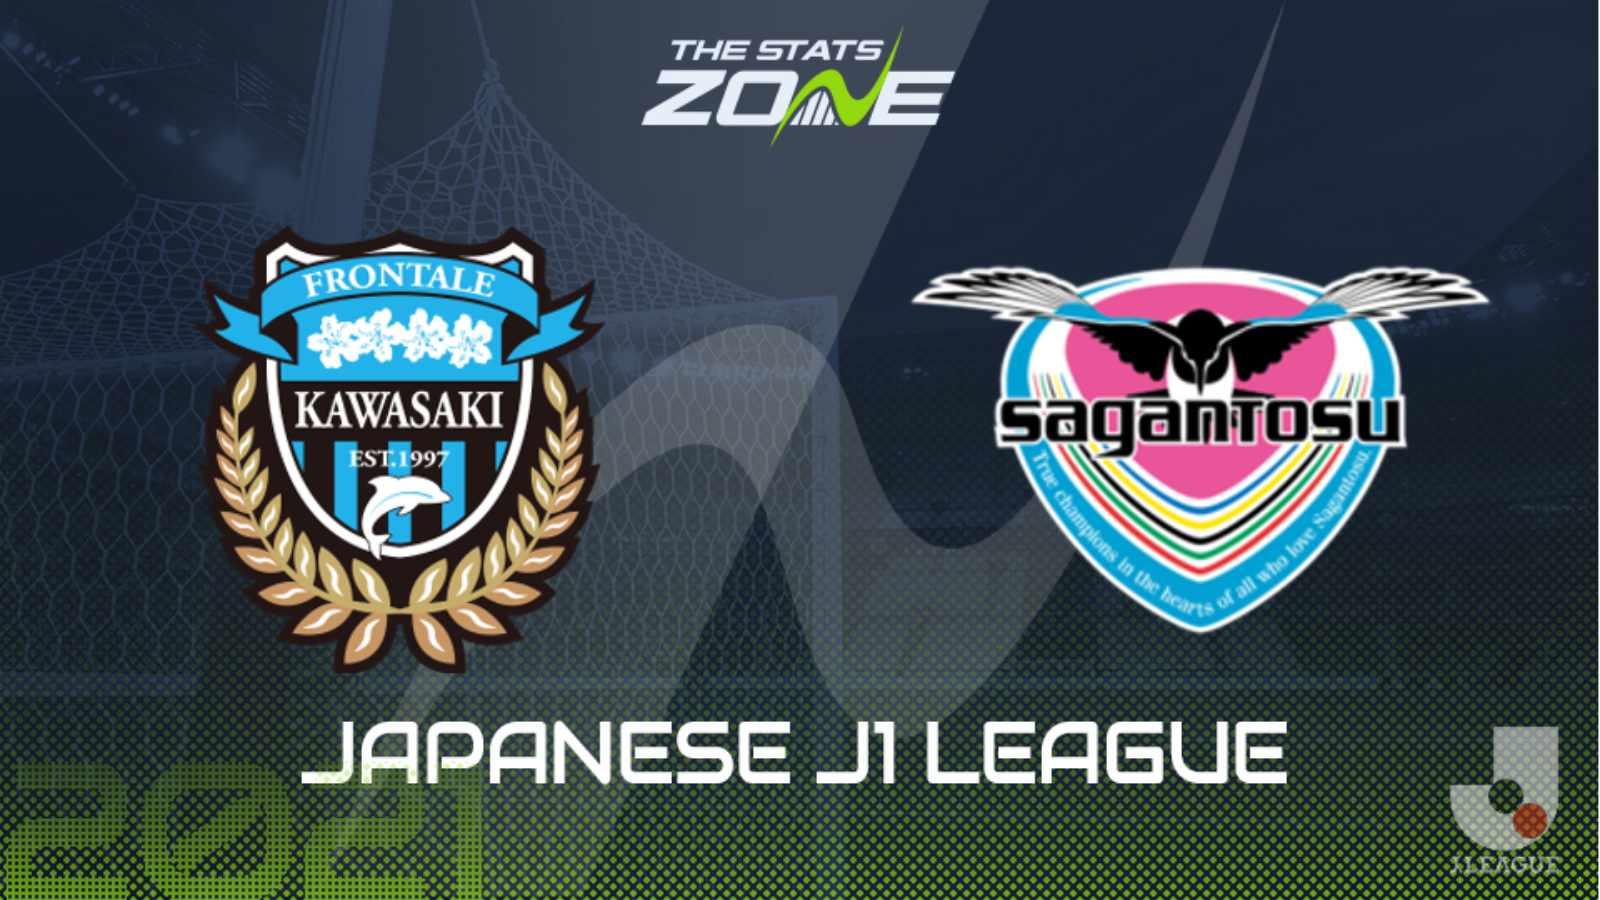 2021 J1 League – Kawasaki Frontale vs Tosu & Prediction - The Stats Zone